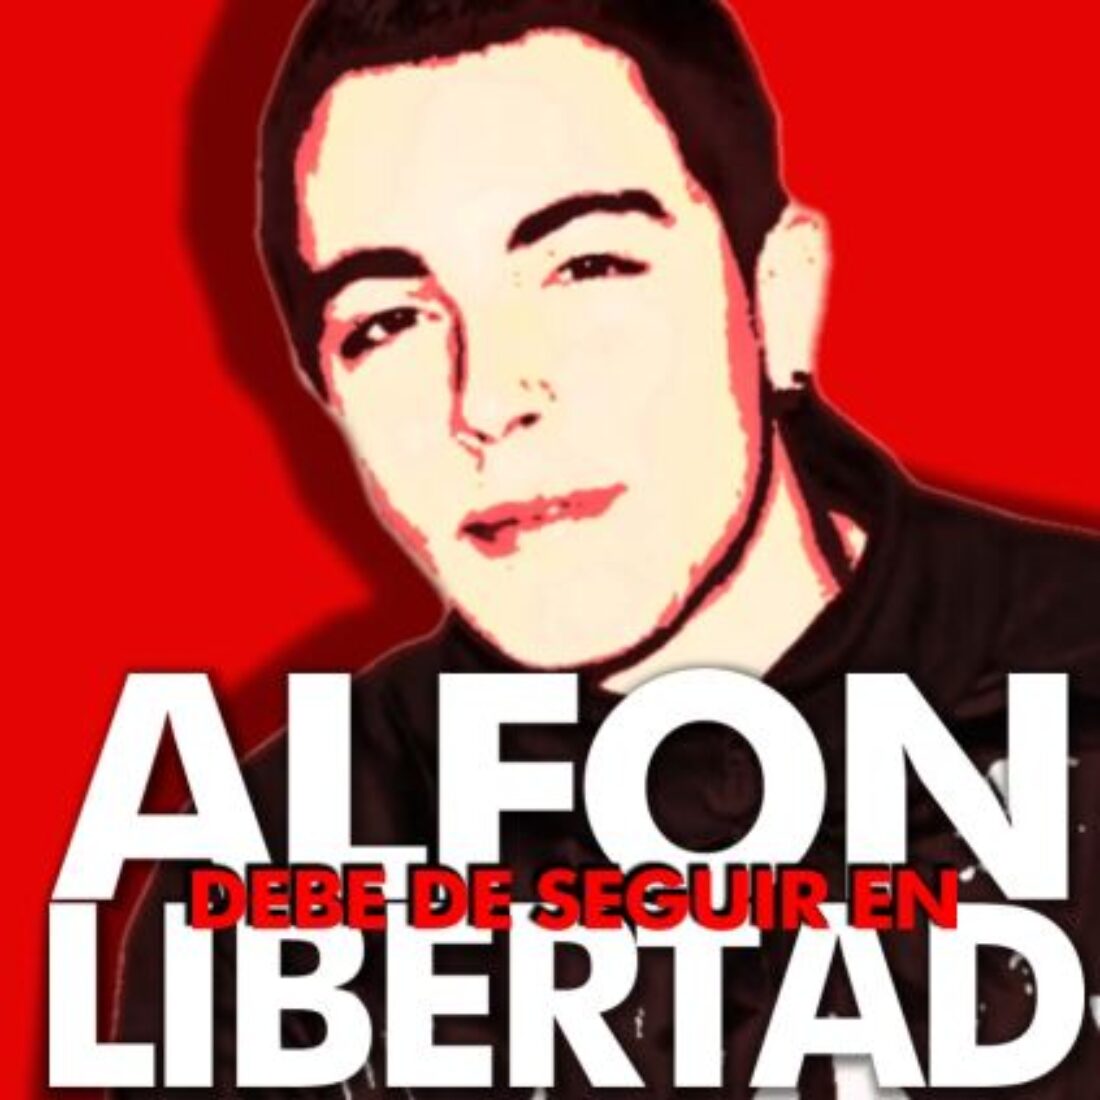 16-S: Jornada de Solidaridad Internacional por la libertad de Alfon. Convocatorias